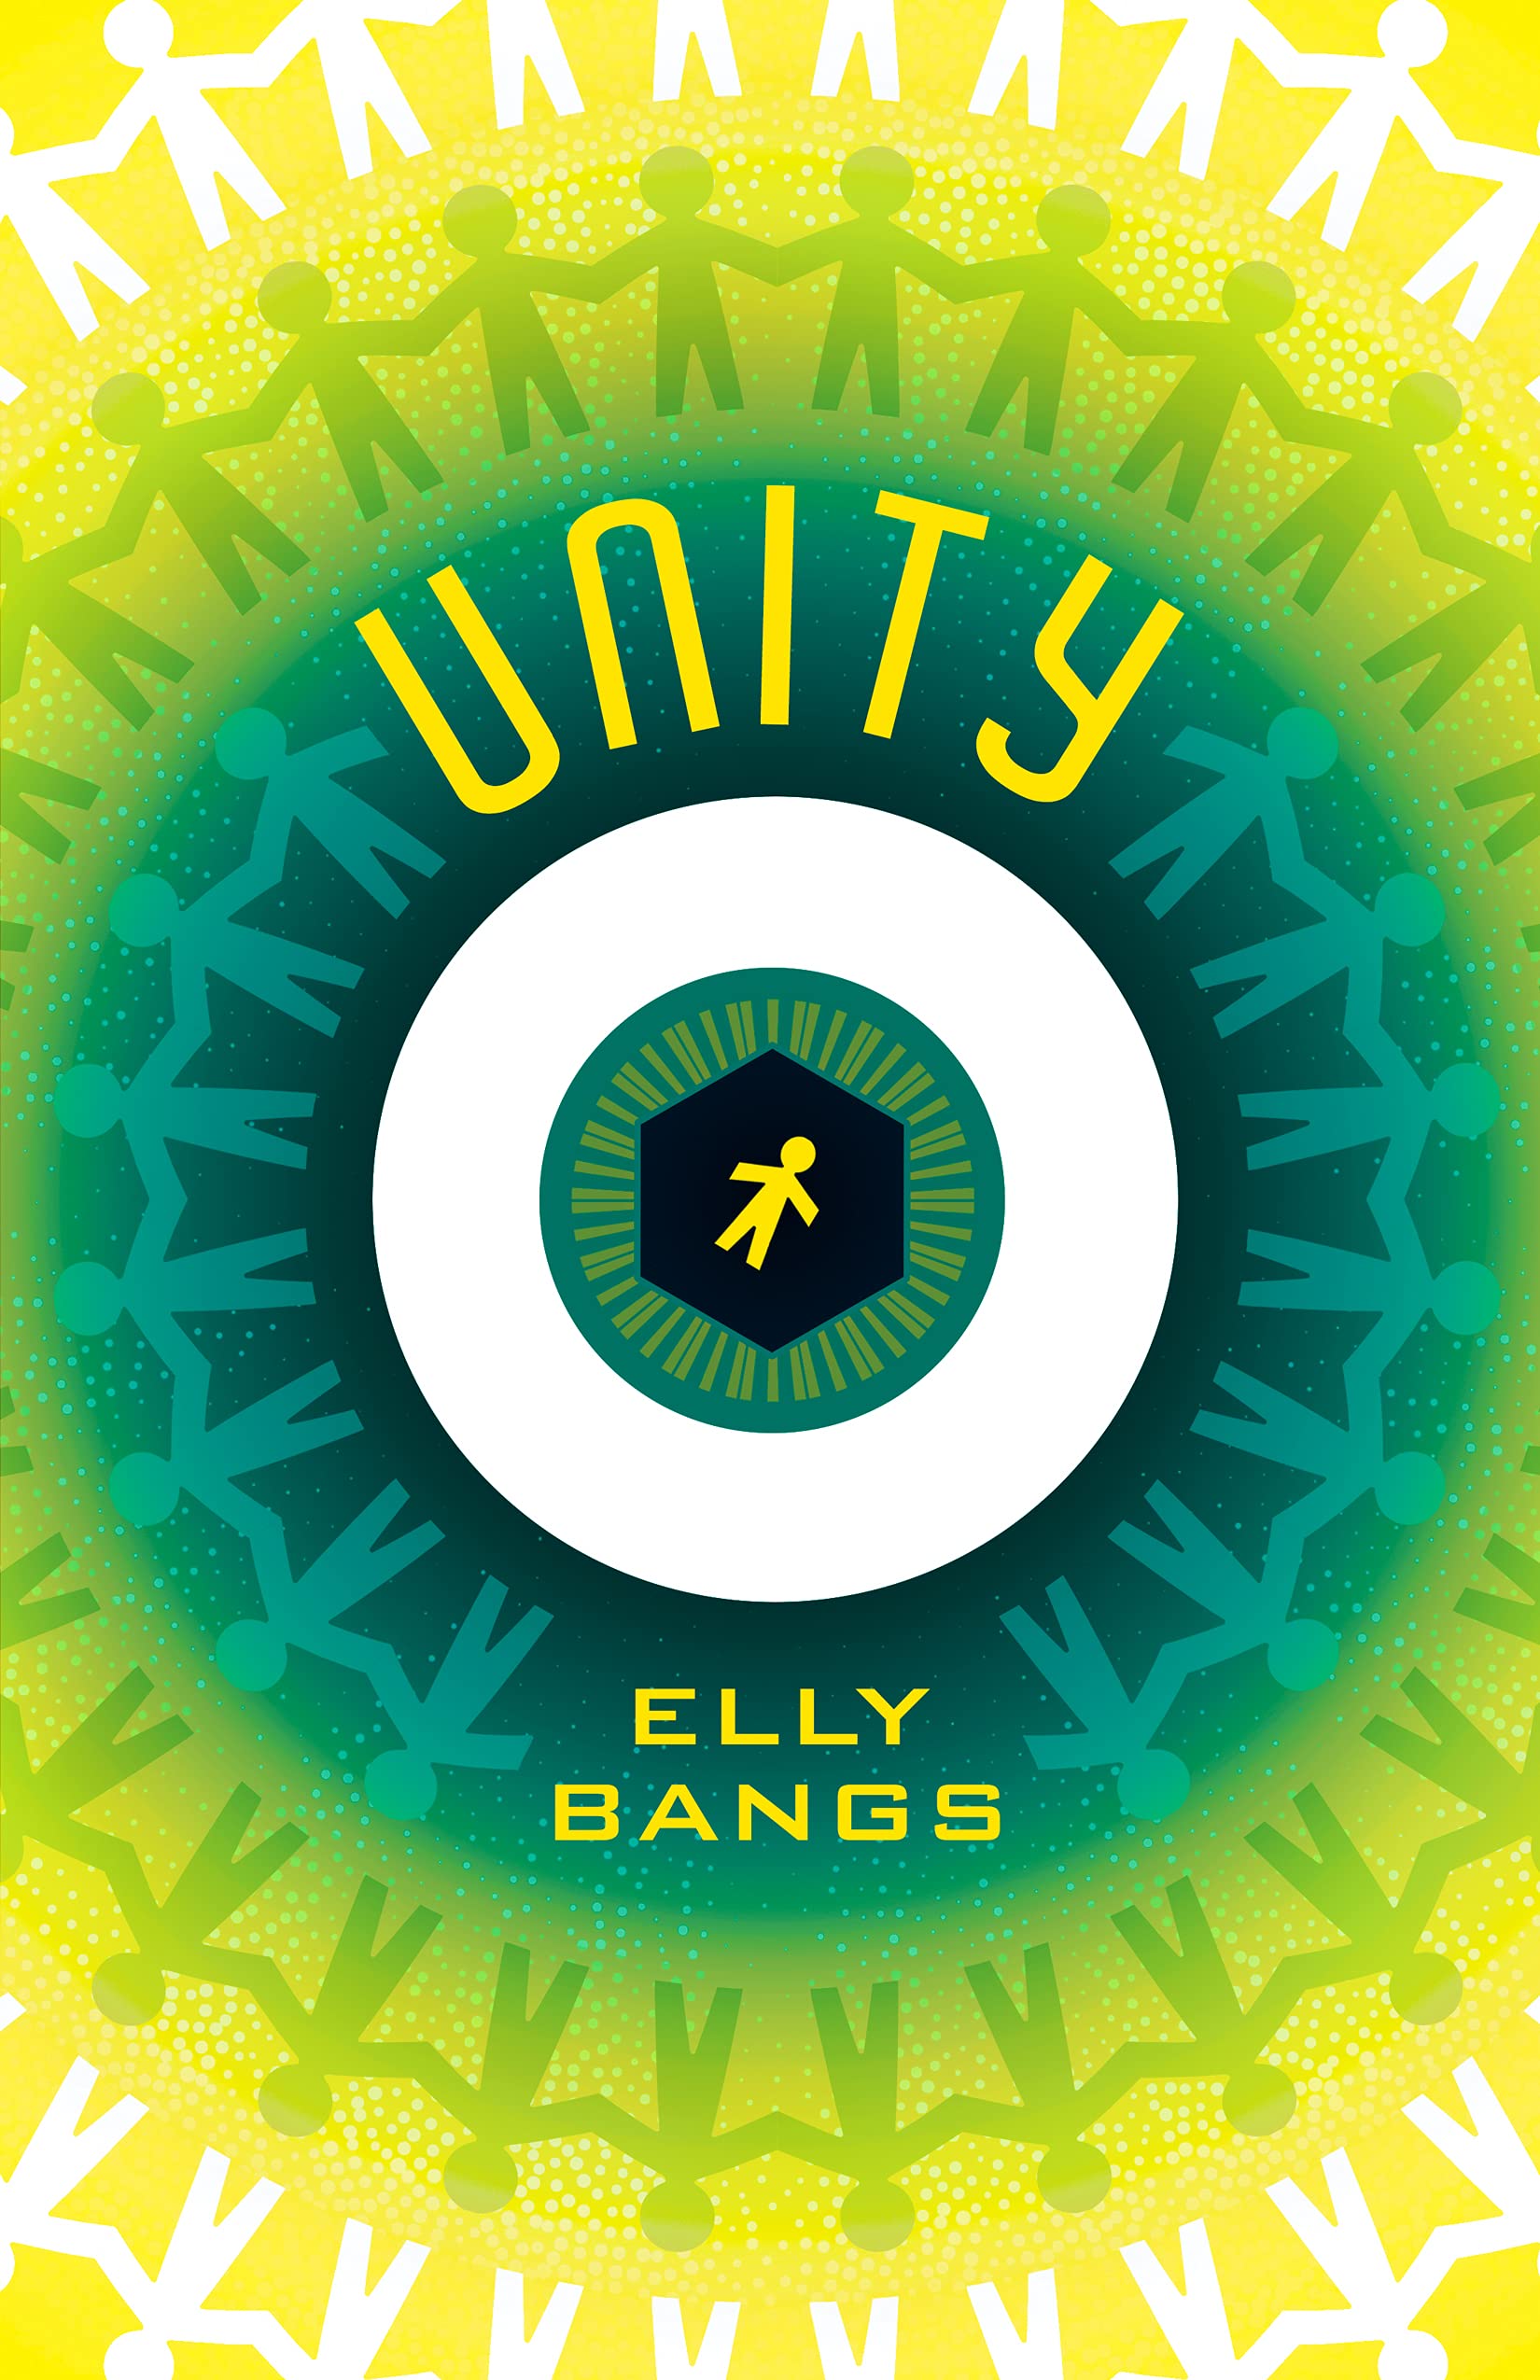 « Unity », d’Elly Bangs